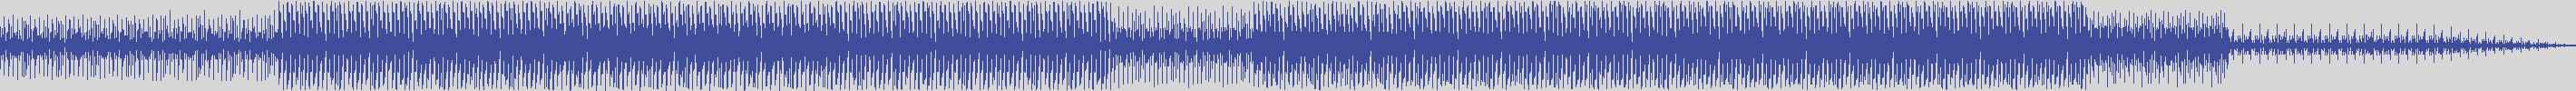 nf_boyz_records [NFY010] Dj Procton - Code Quartz [Tribe Mix] audio wave form